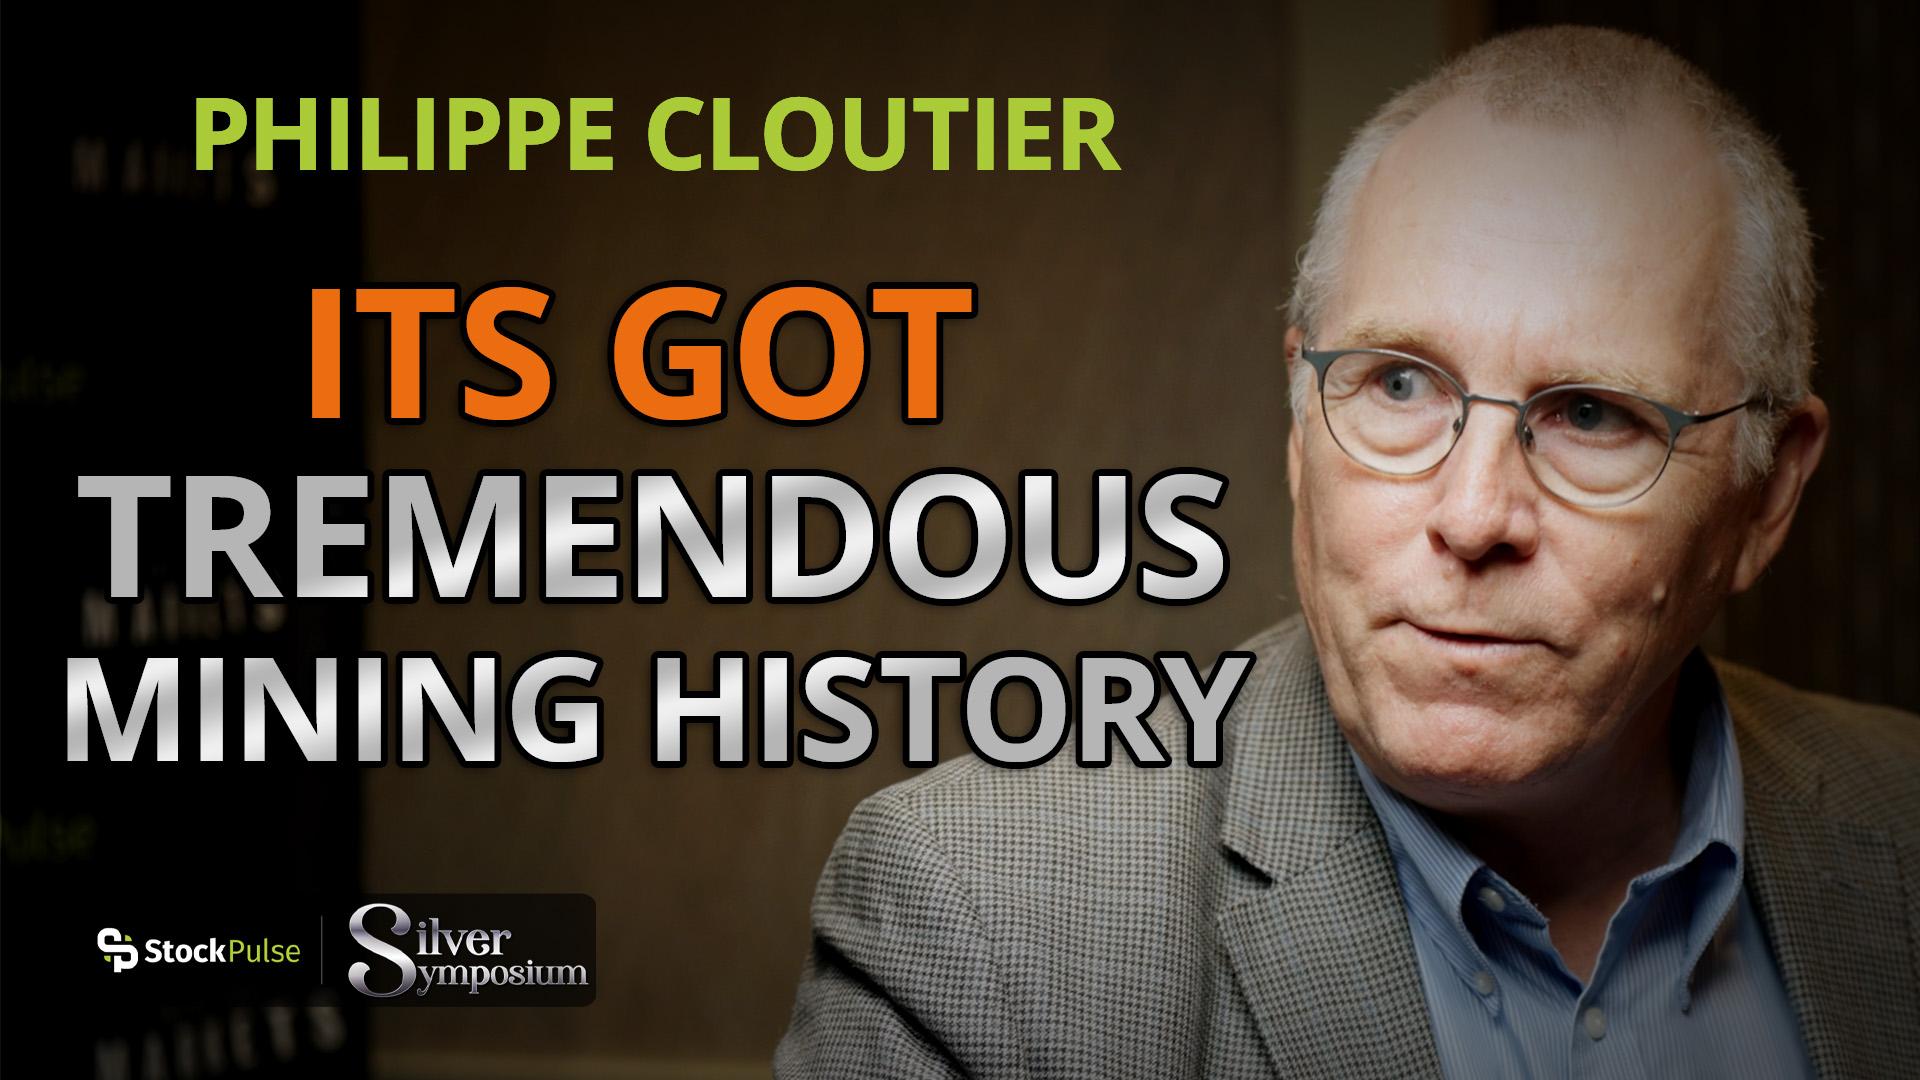 Philippe Cloutier: It’s Got Tremendous Mining History